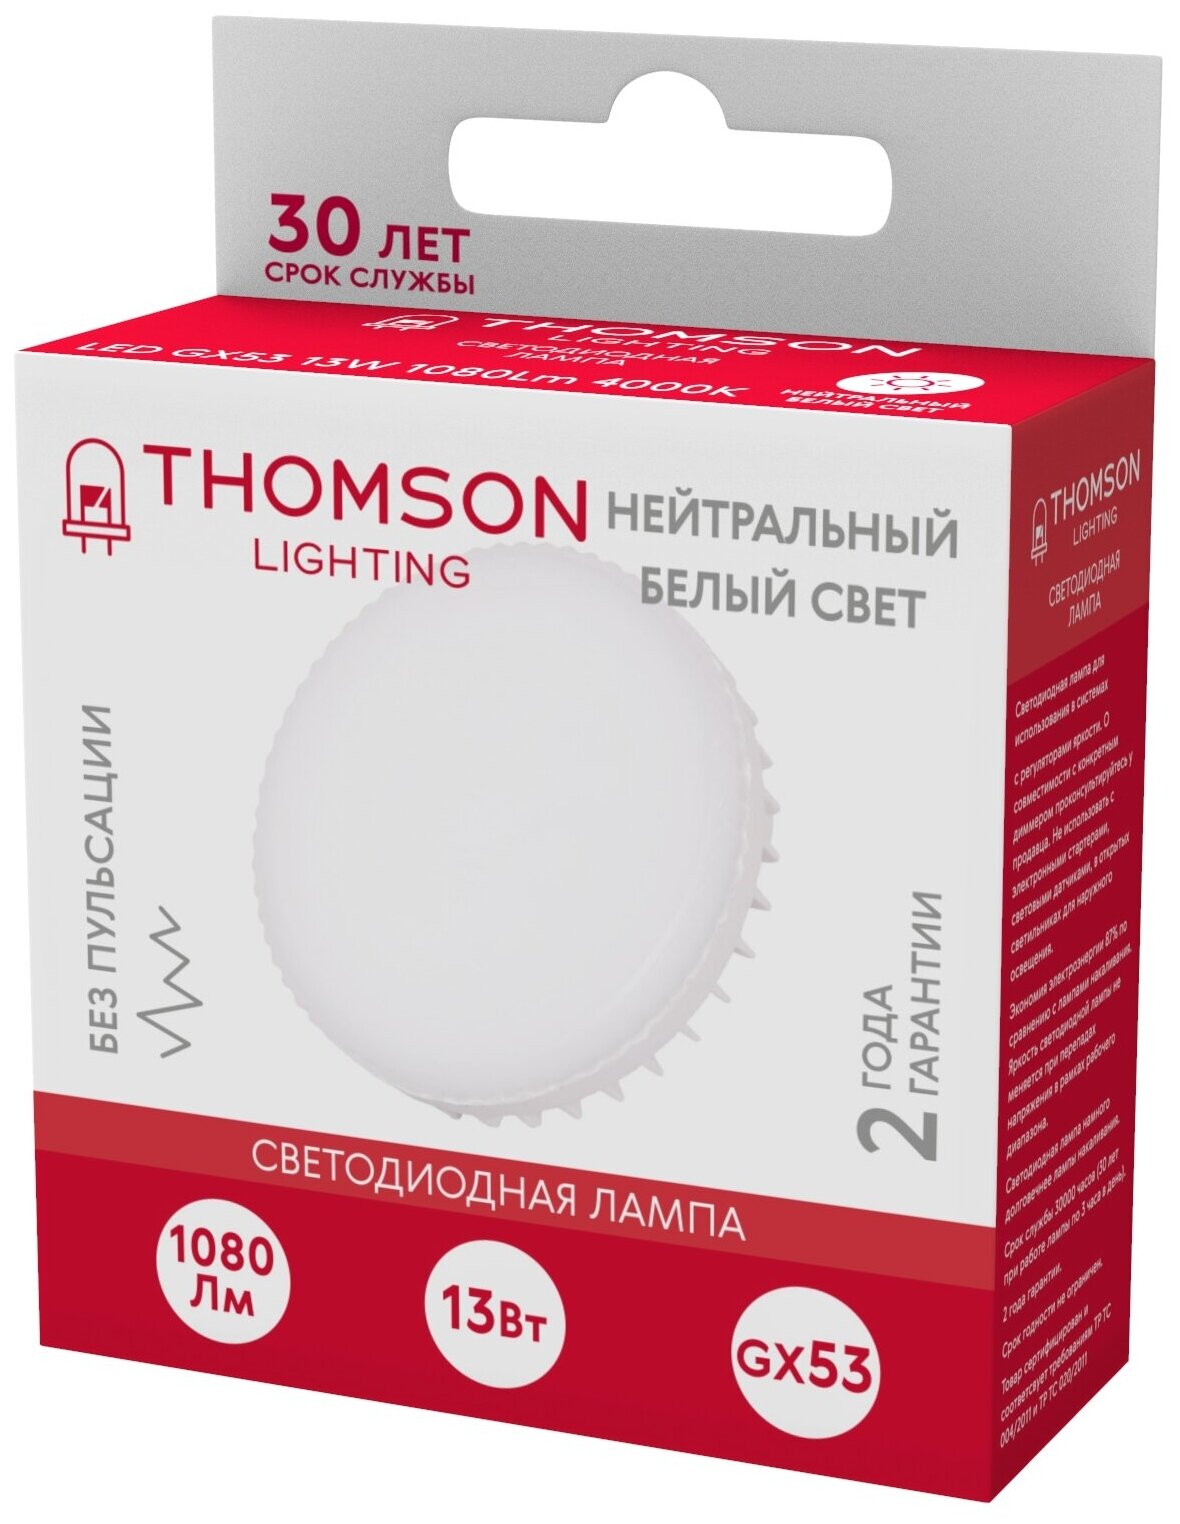 Лампа светодиодная THOMSON LED GX53 13Вт 1080Lm 4000K таблетка - фотография № 2